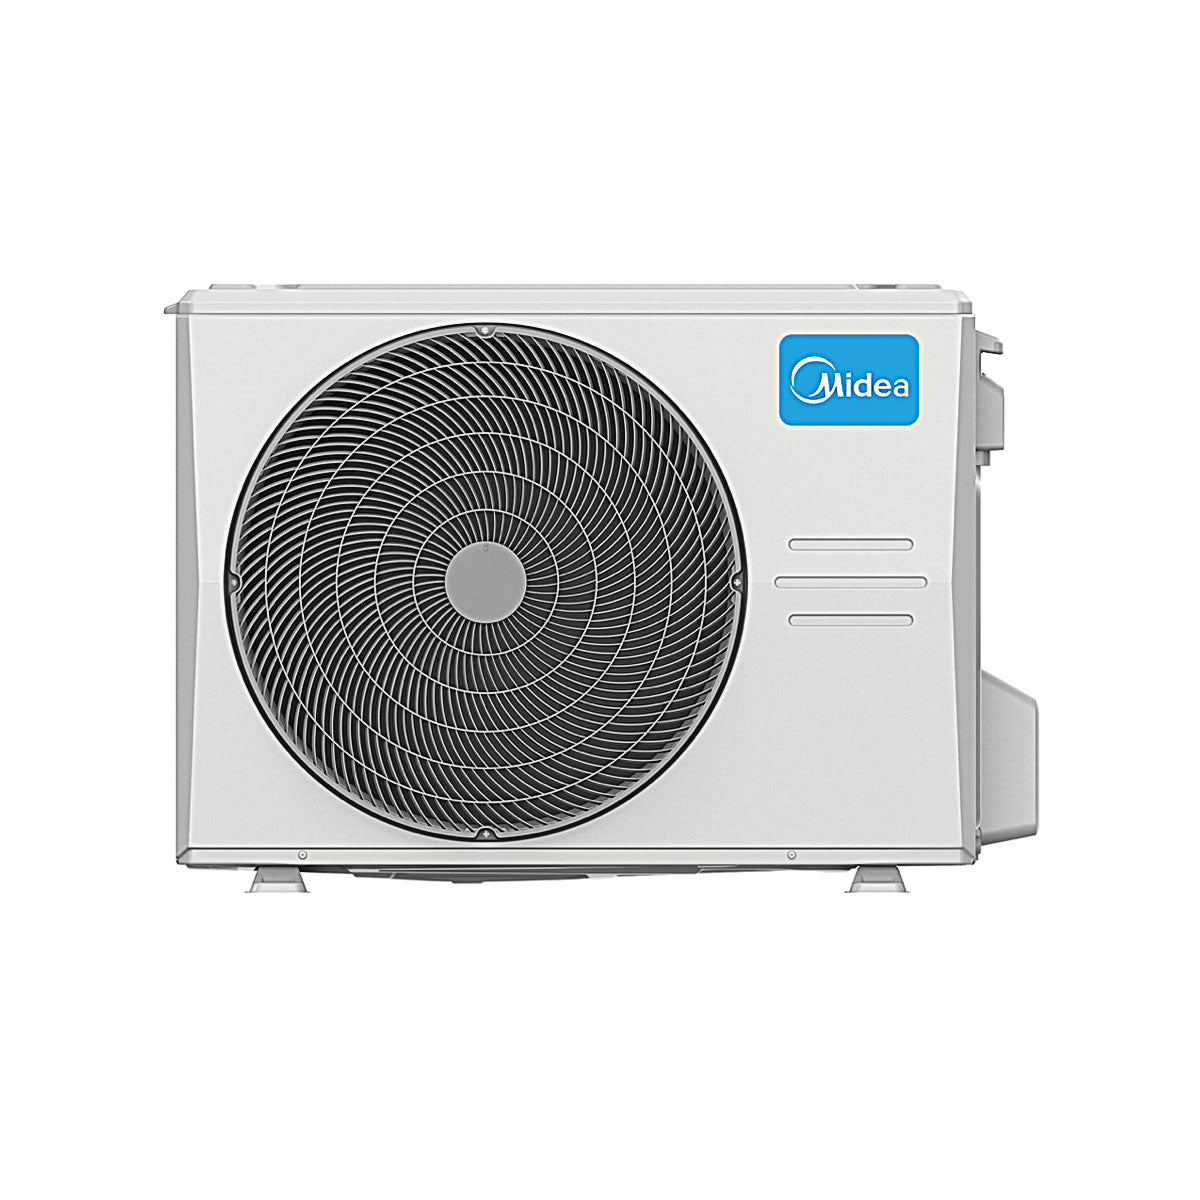 Midea Xtreme Save Split Air Conditioner 3.5 kW